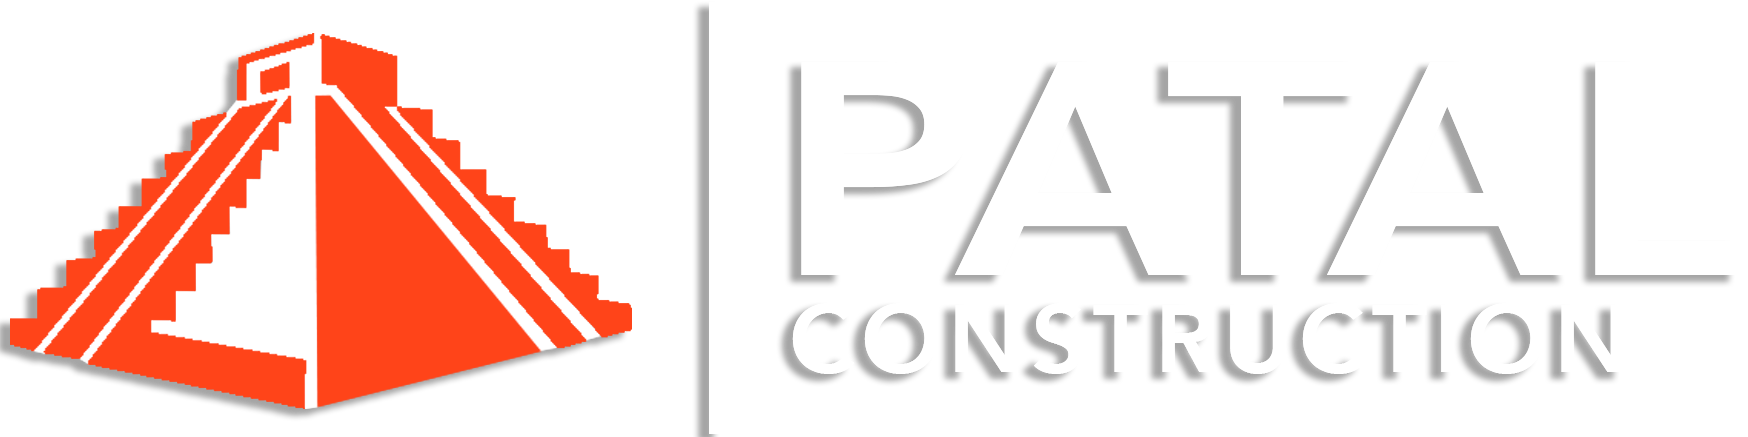 Patal Construction Logo